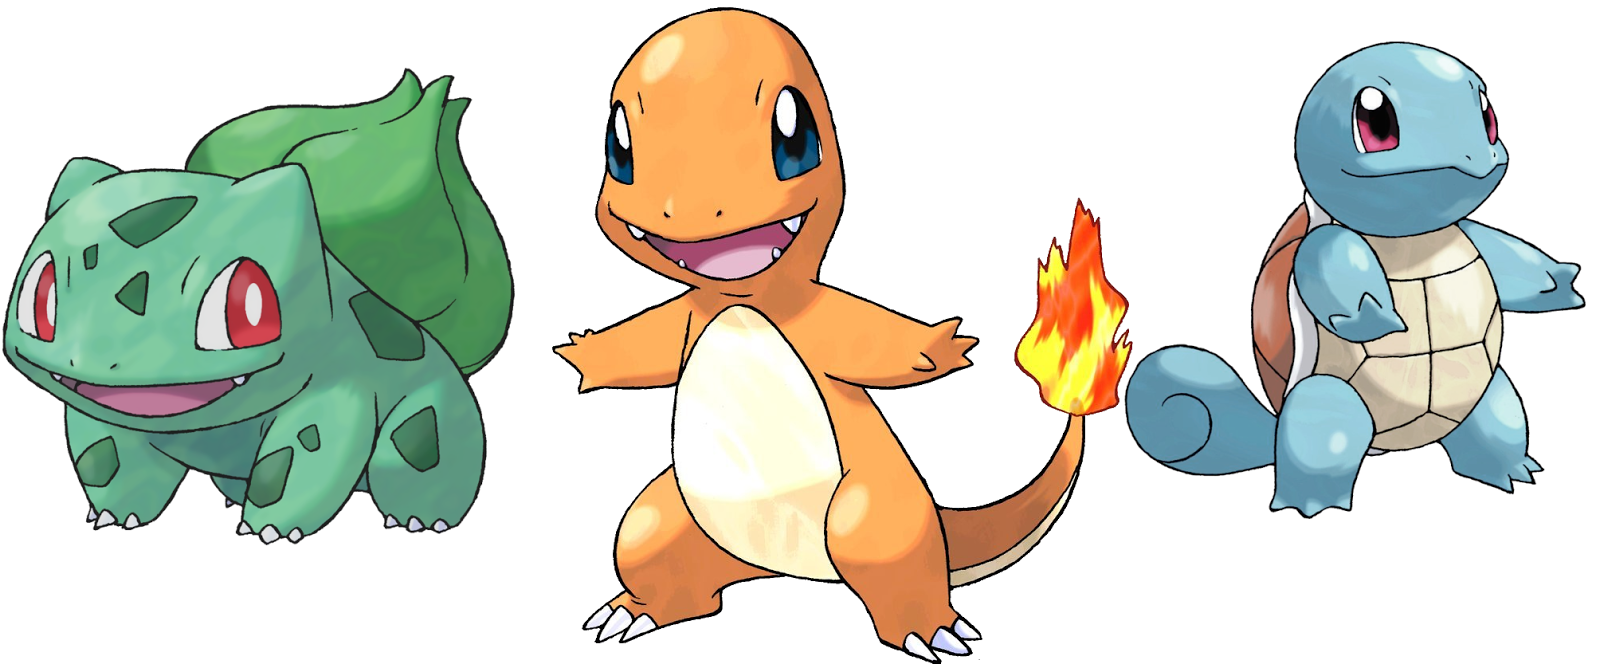 Pokemon GO tips and trick: Charmander, Squirtle, Bulbasaur Atau